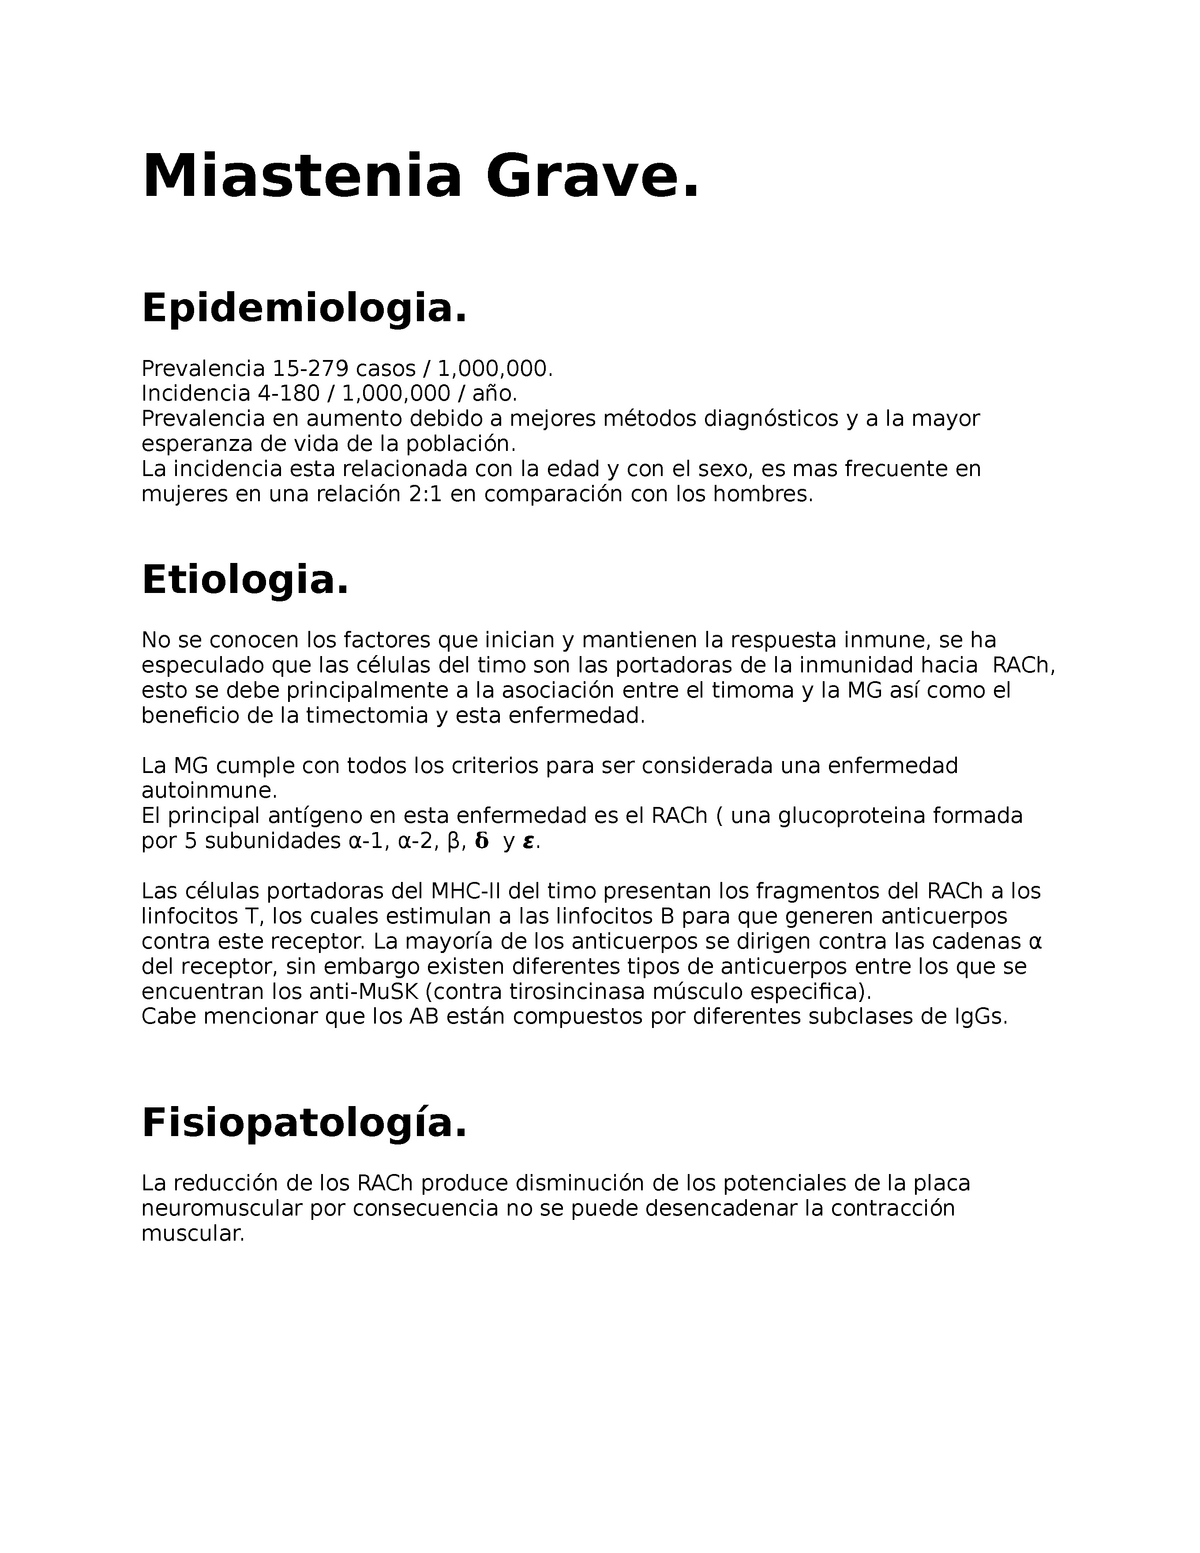 Miastenia Gravis Resumen Neurología Miastenia Grave Epidemiologia Prevalencia Casos 0509